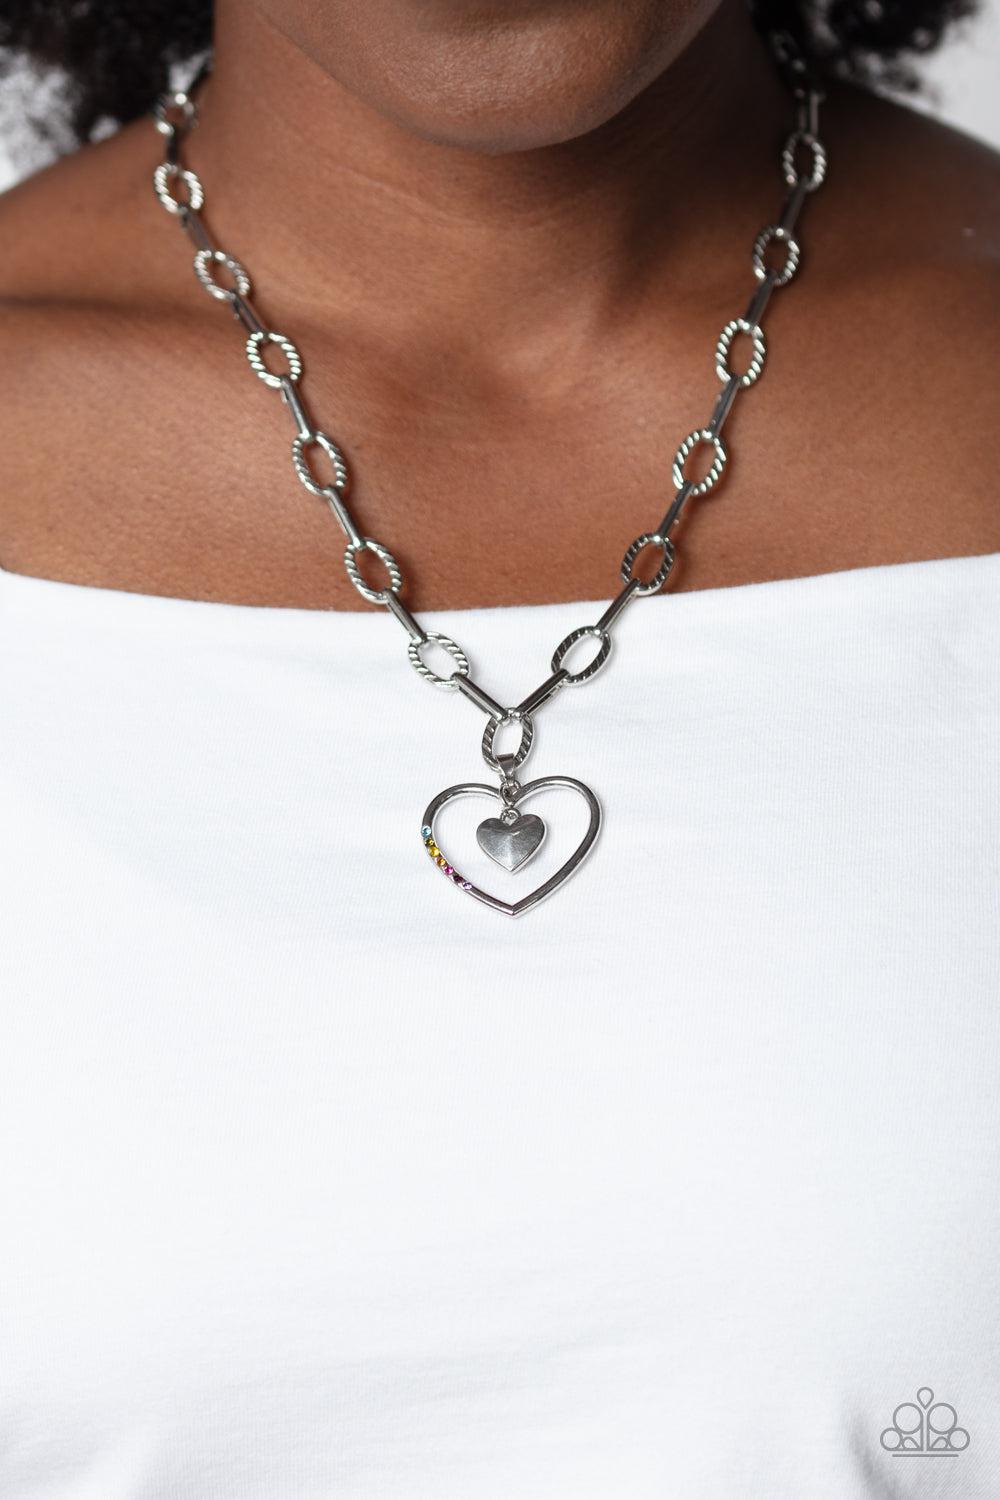 Refulgent Romance Multi Heart Necklace - Paparazzi Accessories-on model - CarasShop.com - $5 Jewelry by Cara Jewels